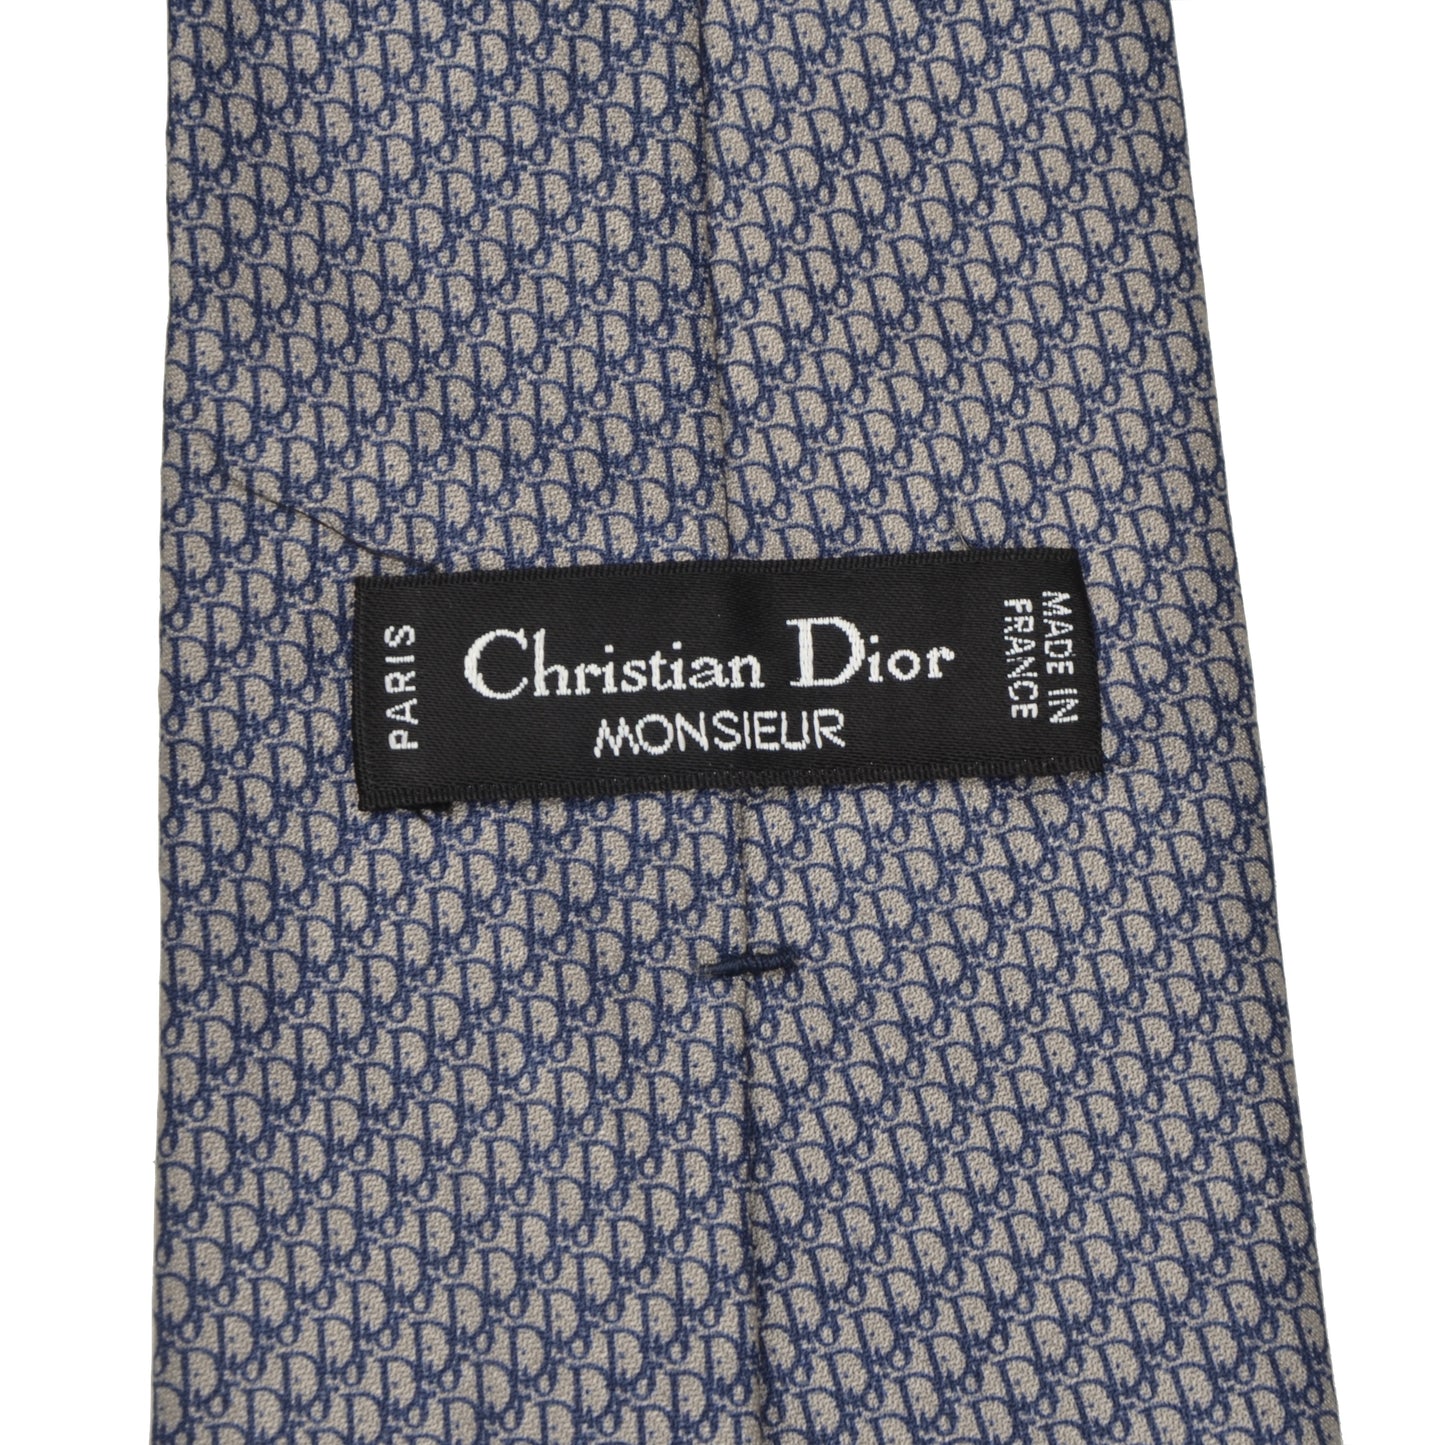 Christian Dior Spellout Wool/Silk Tie